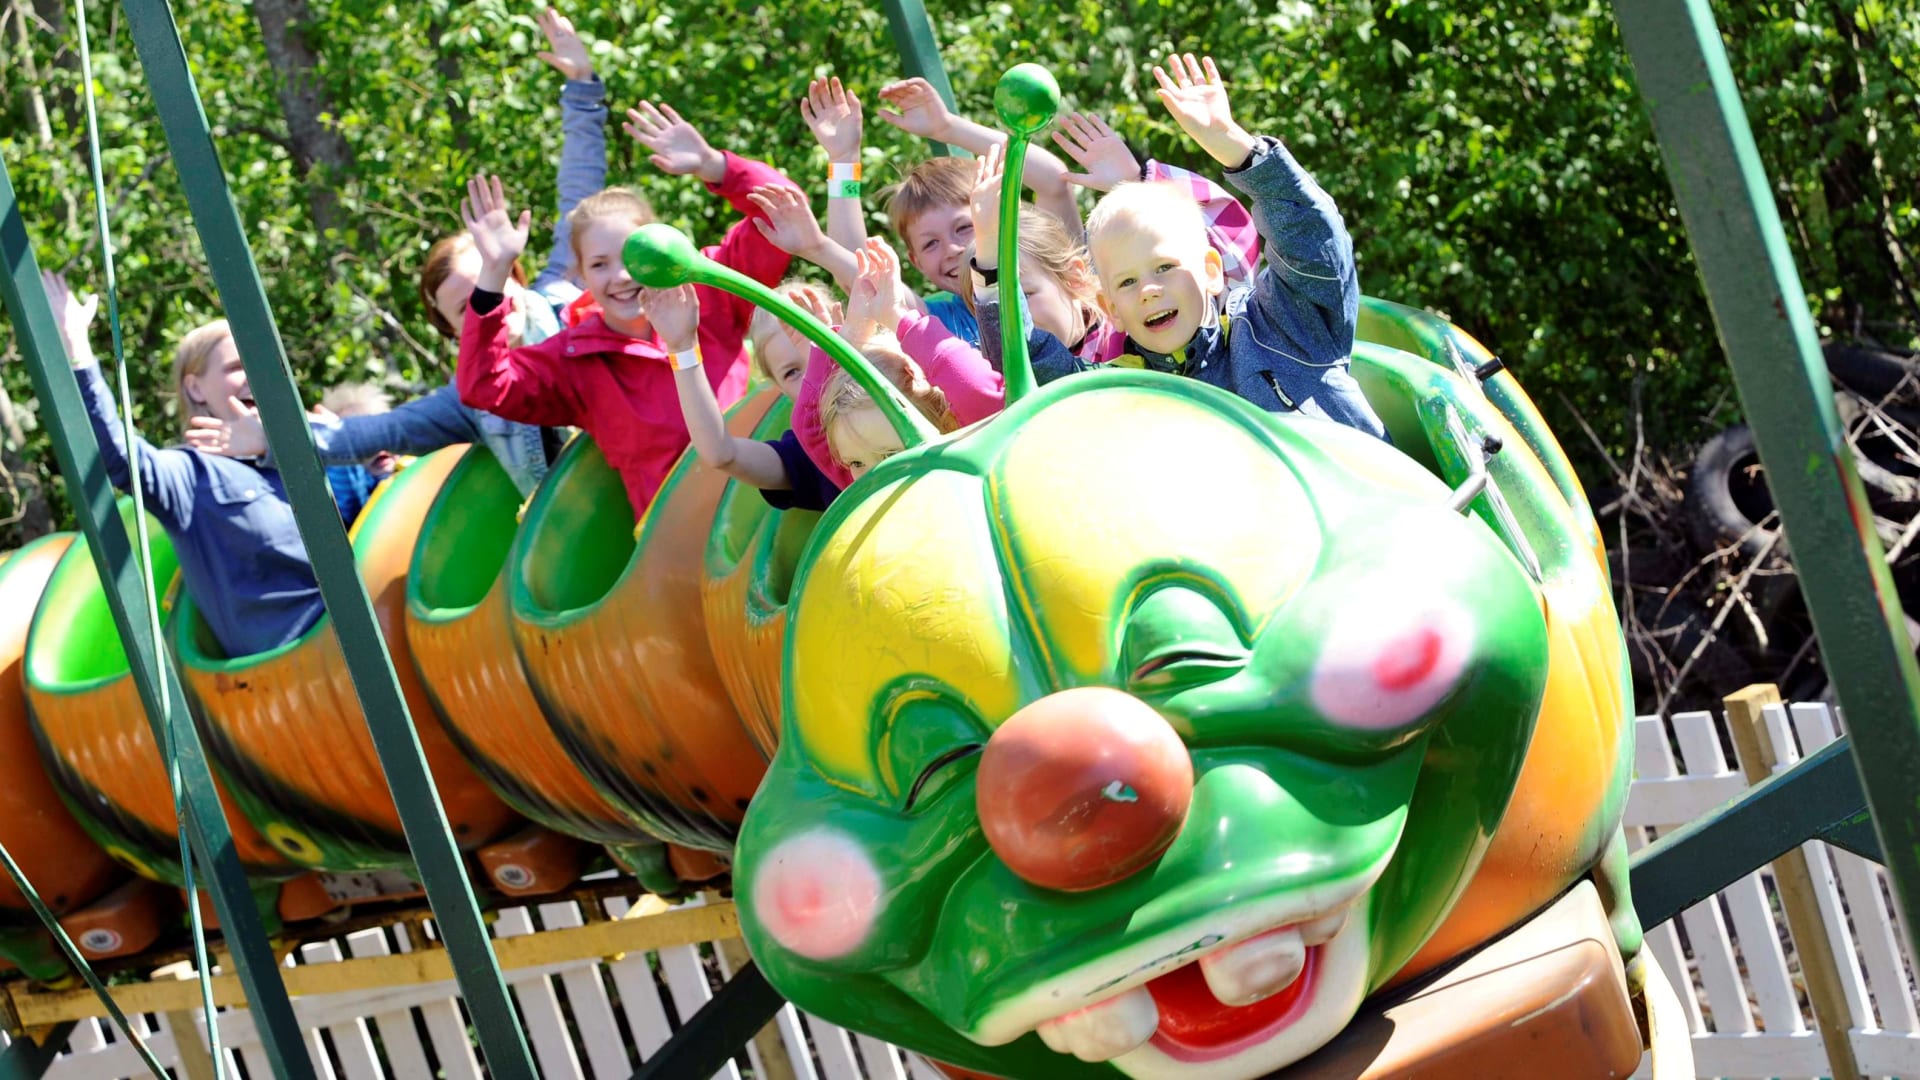 Kids favorite roller coaster ride in amusement park Vauhtipuisto.